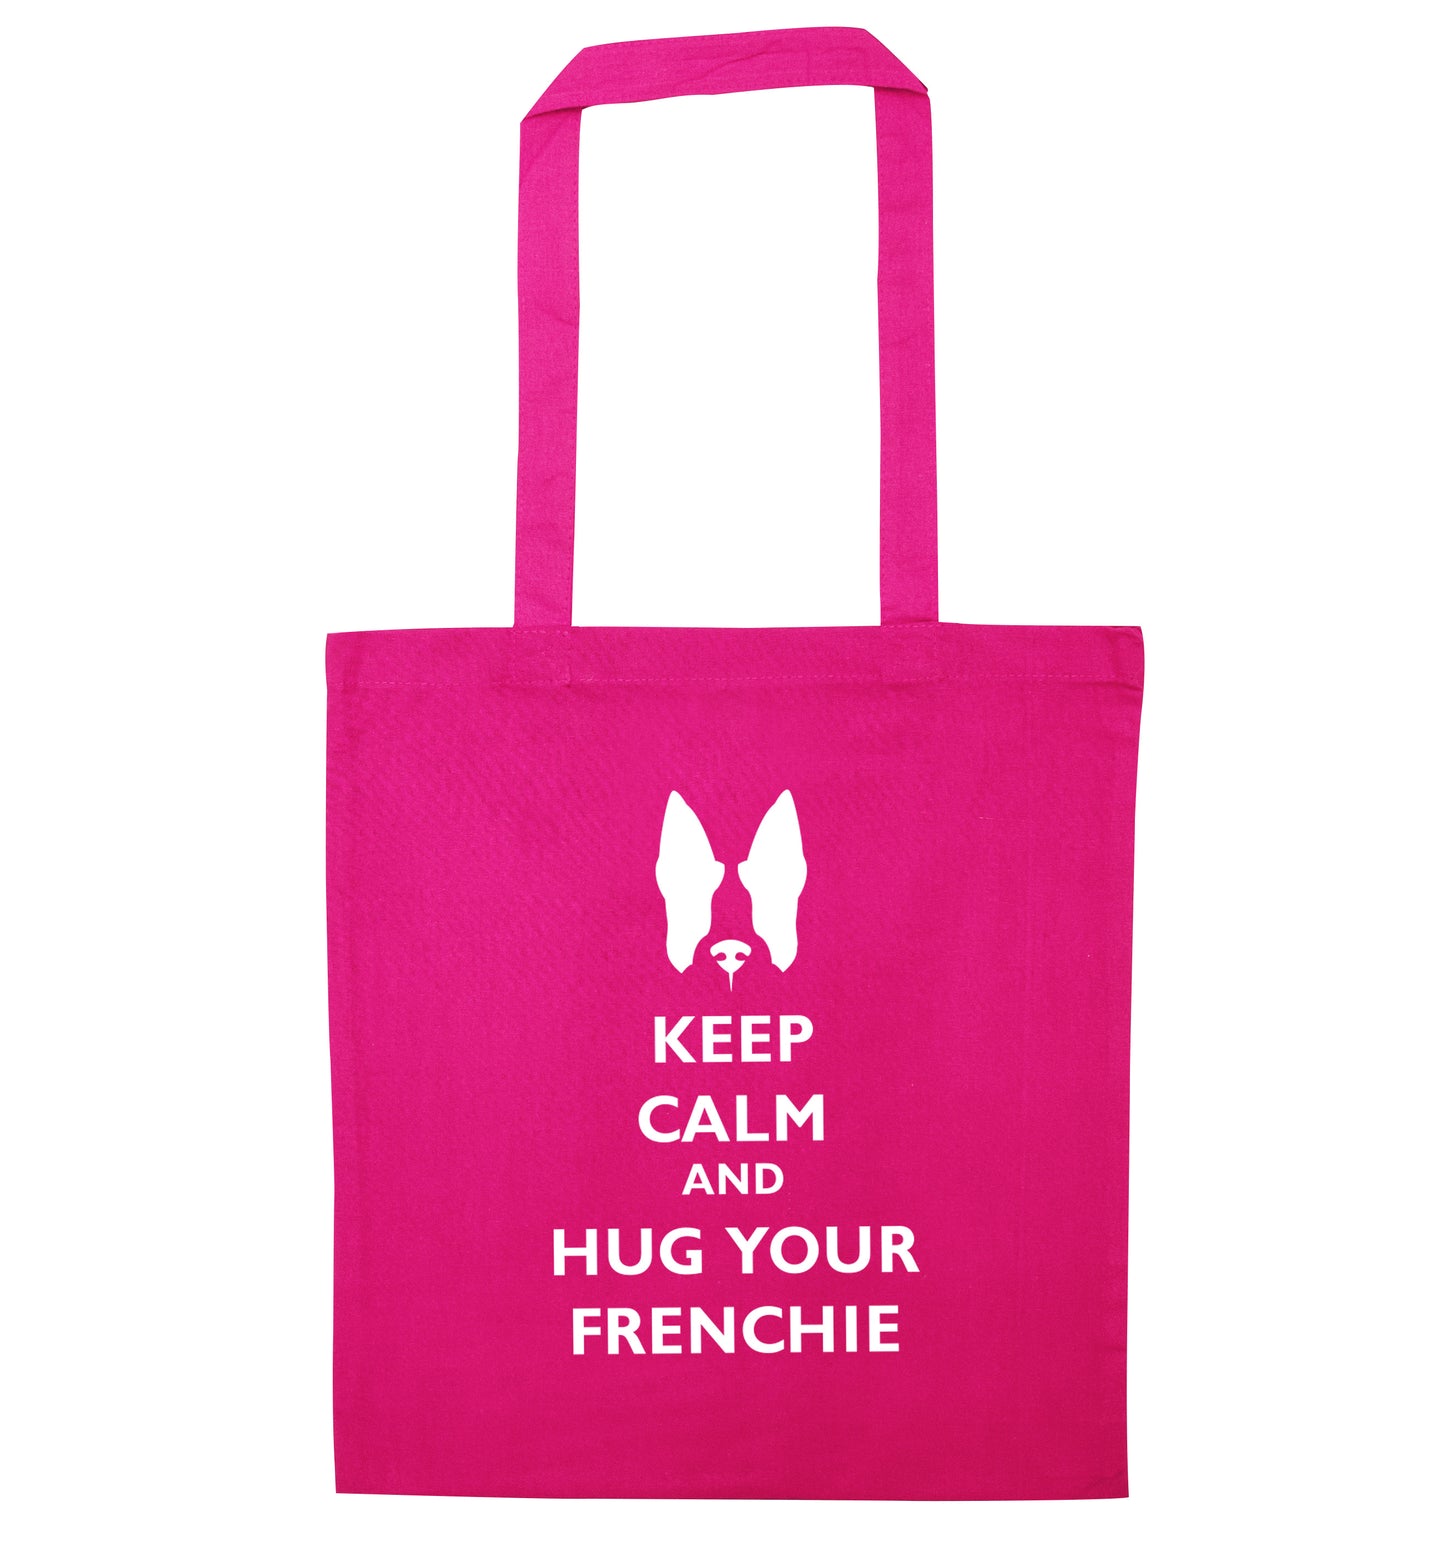 Keep calm and hug your frenchie pink tote bag